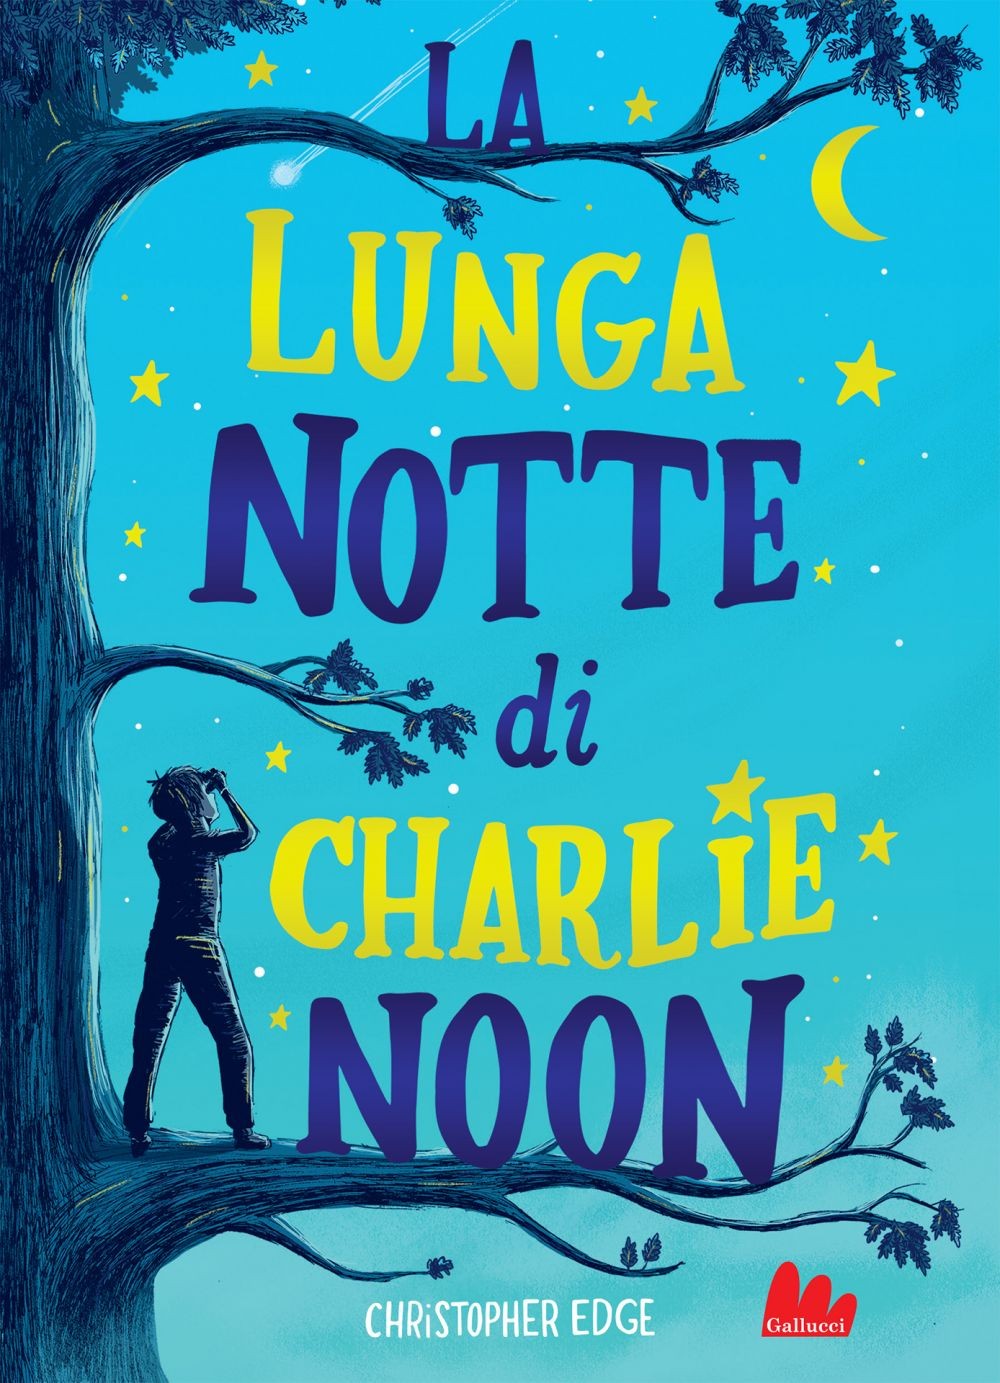 La lunga notte di Charlie Noon - Librerie.coop